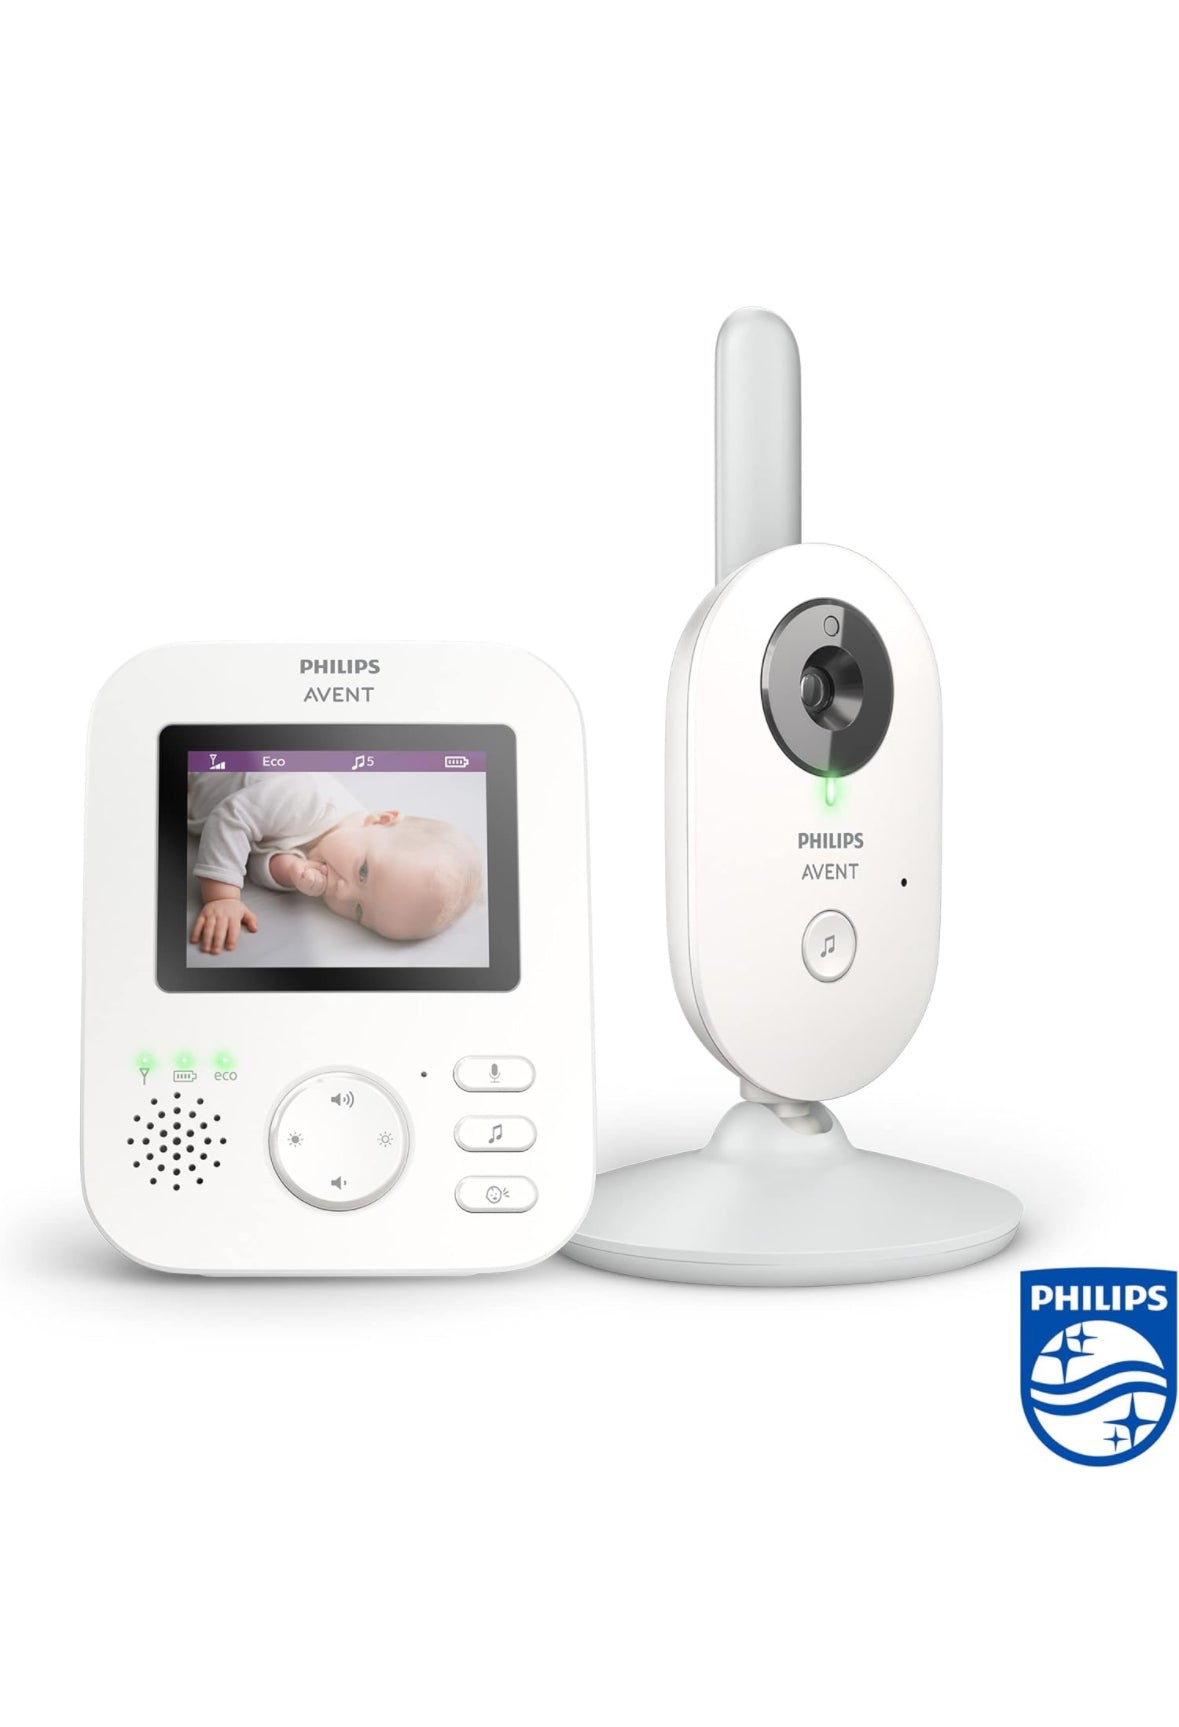 Philips Avent Baby monitor Digital Video Baby Monitor